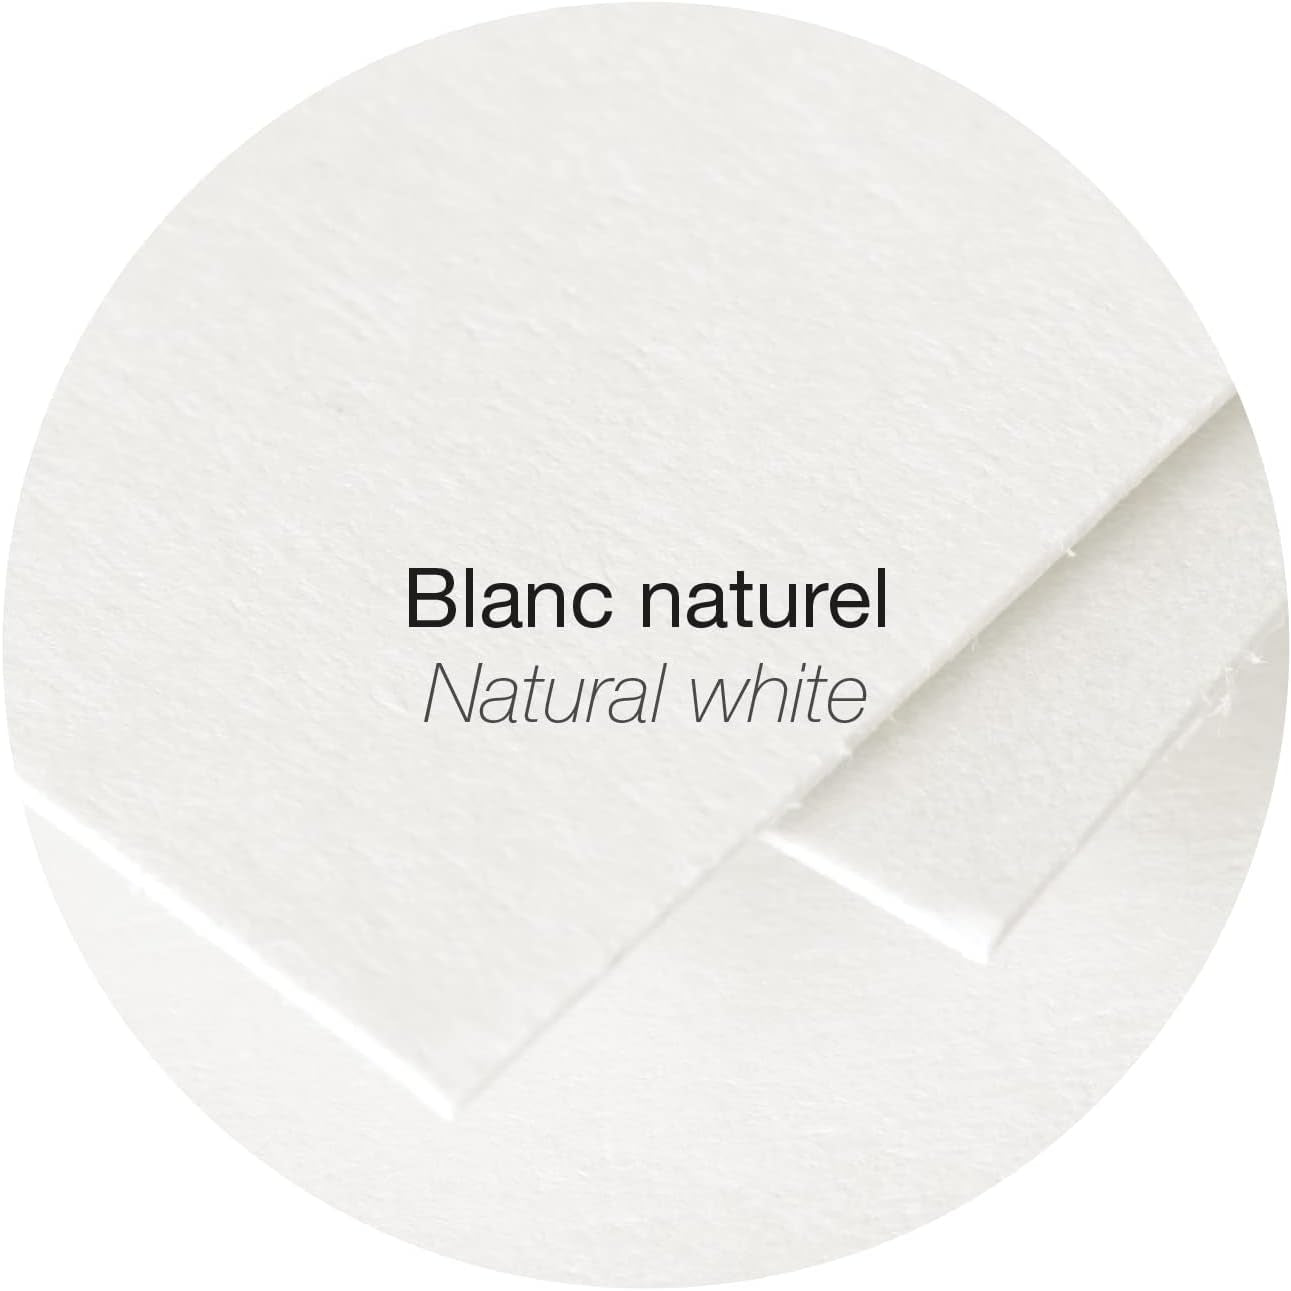 POLLEN Envelopes 120g 165x165mm Natural White